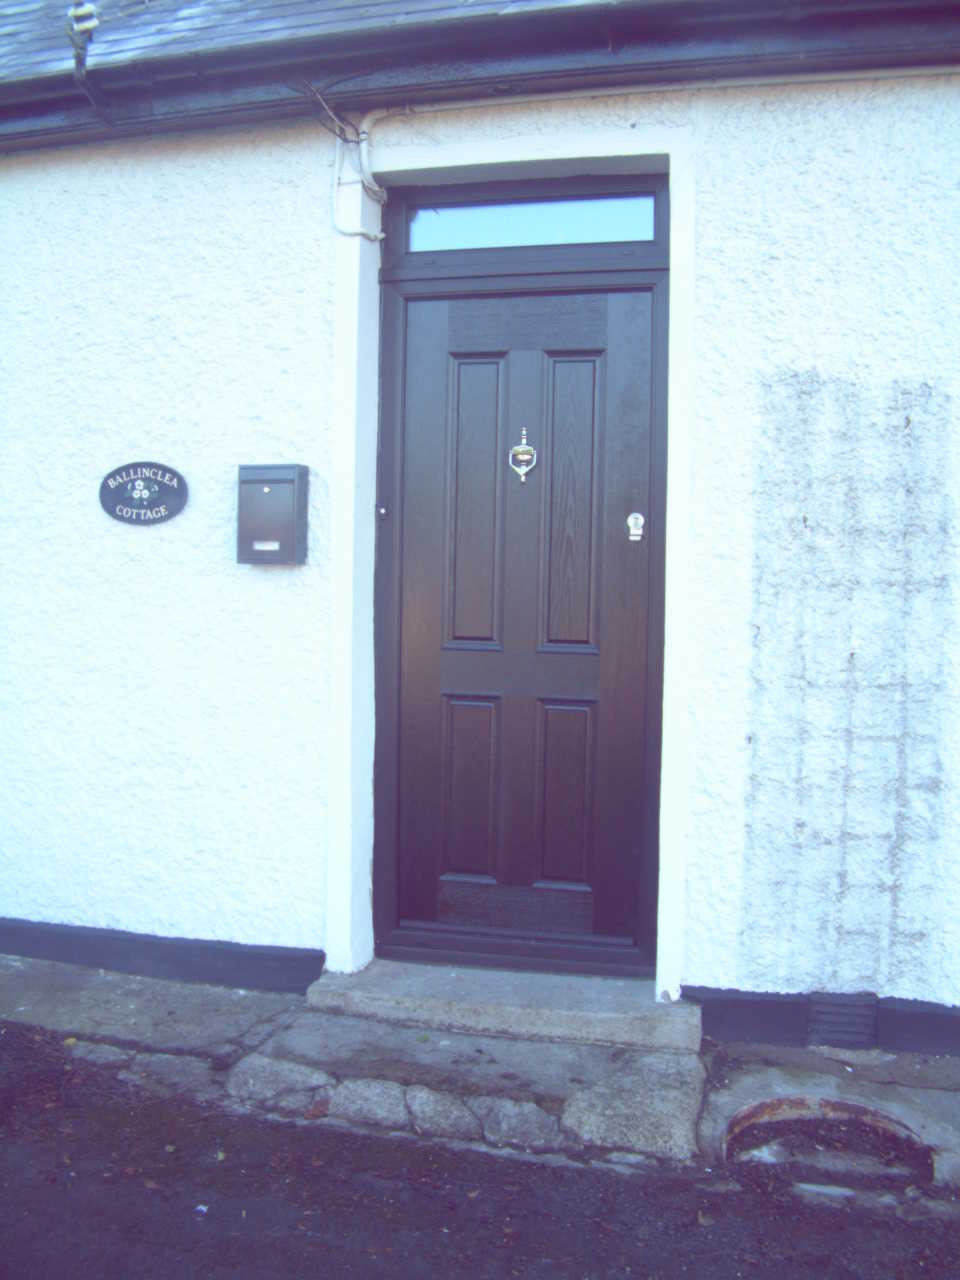 BLACK APEER APM1 FRONT DOOR FITTED BY ASGARD WINDOWS IN DUBLIN.